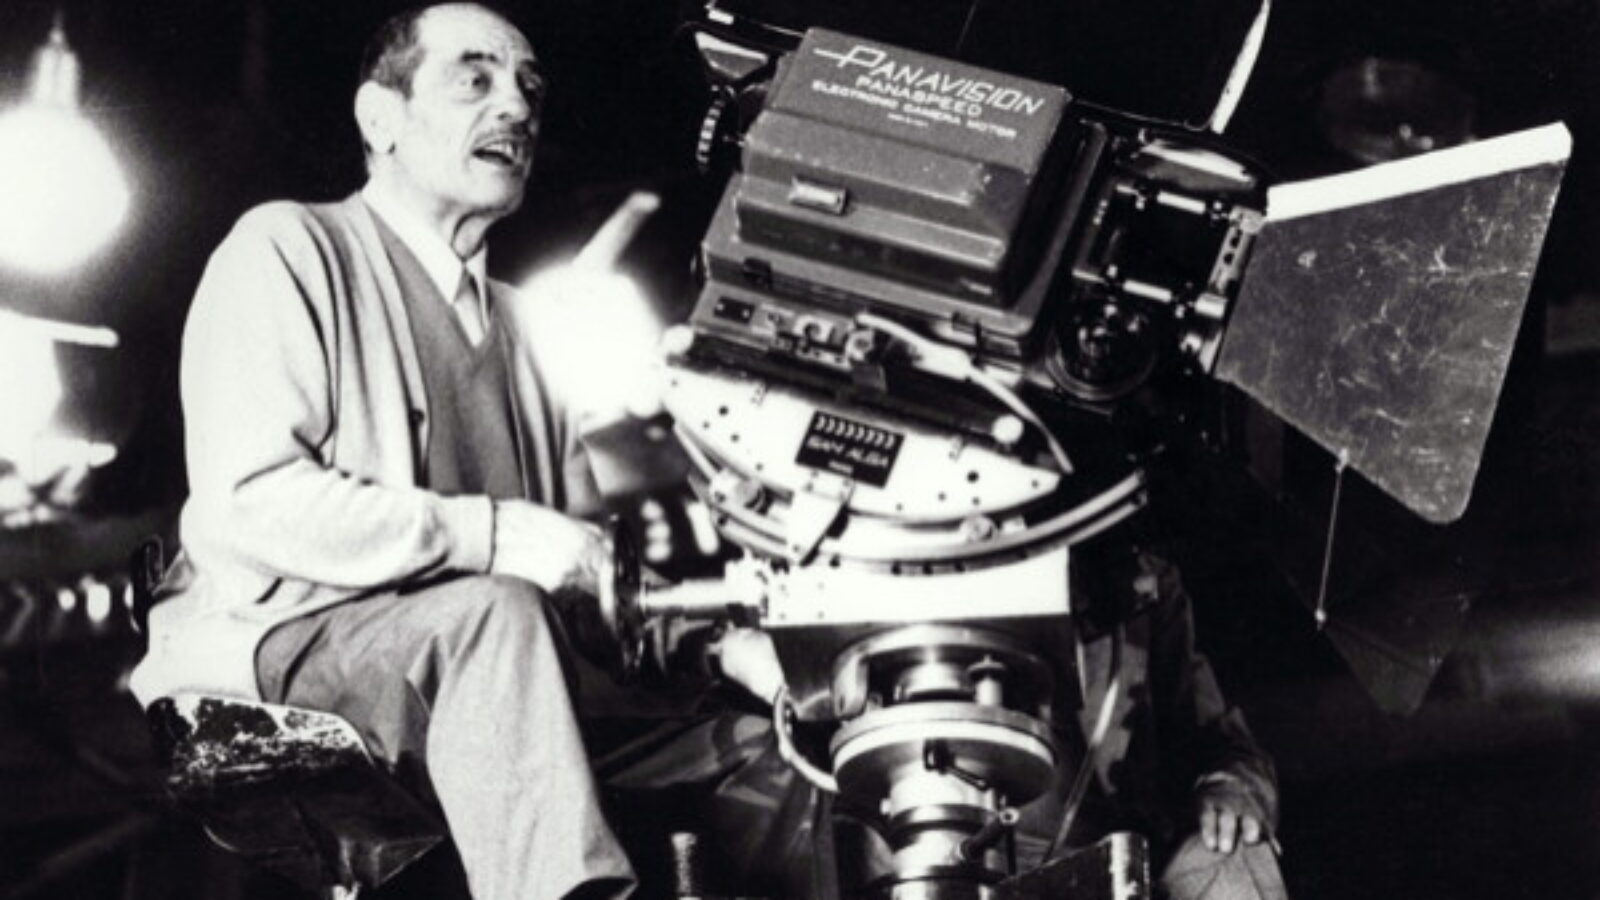 Luis Buñuel: A Filmmaker of Our Time